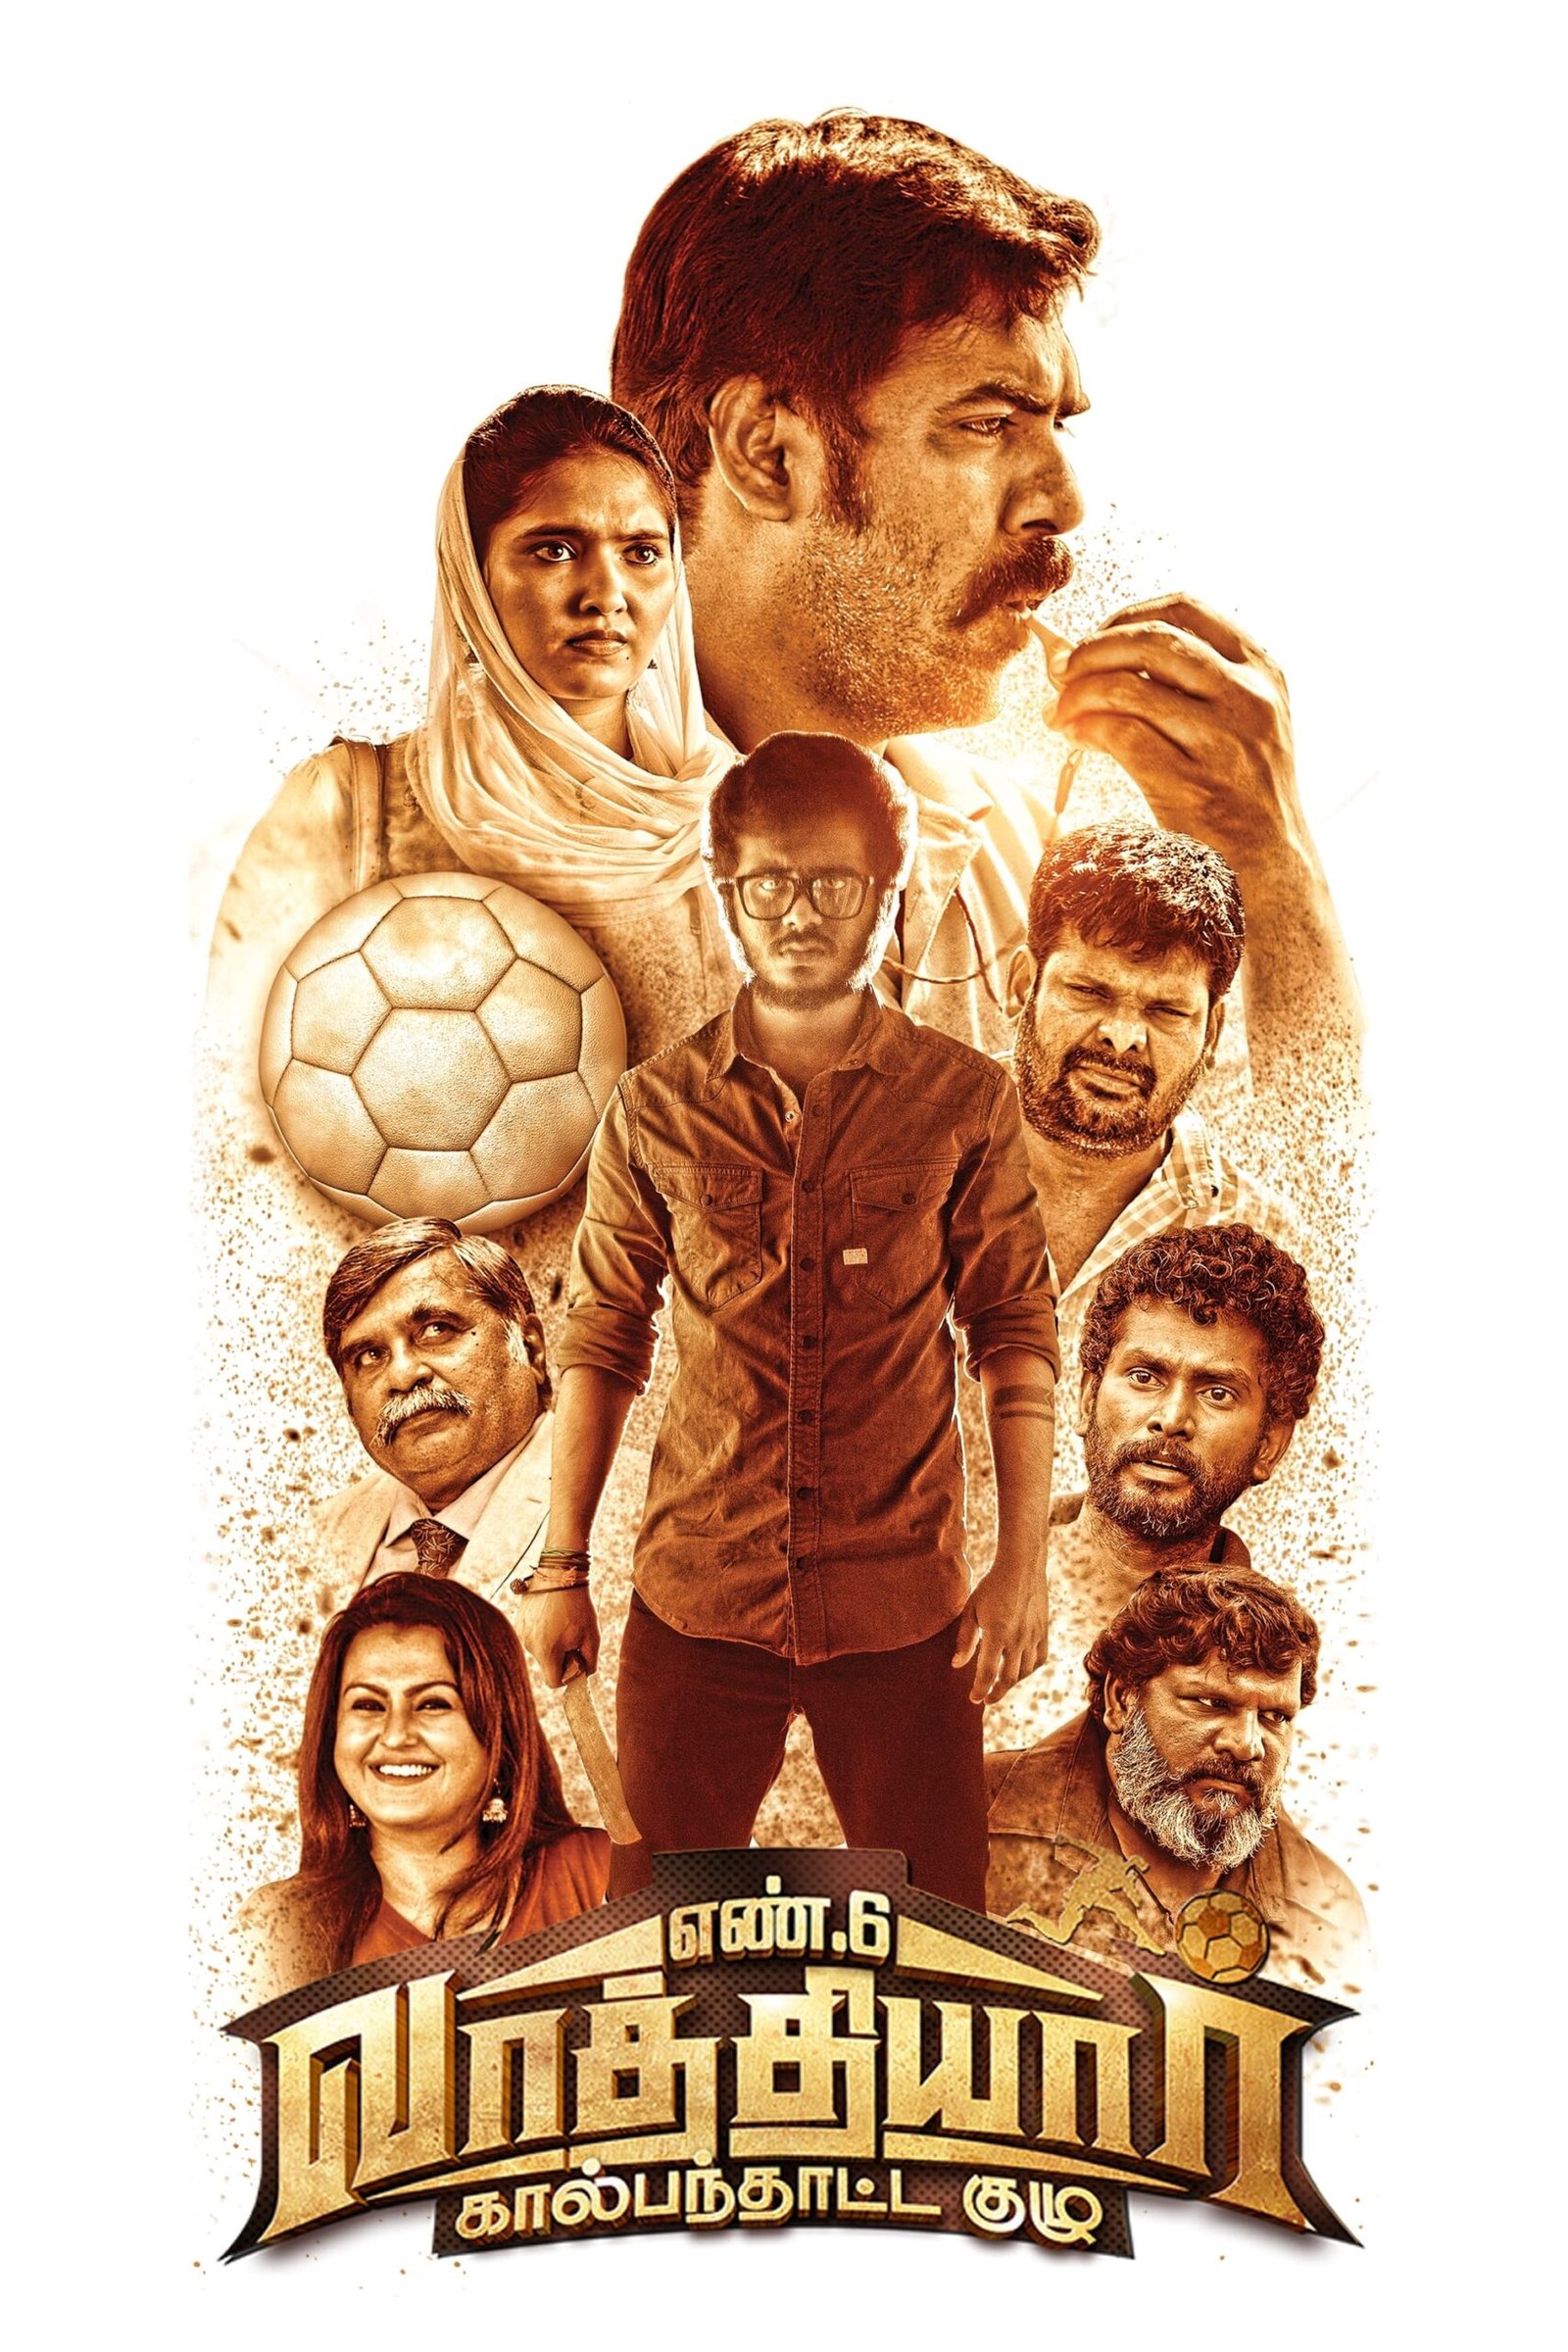 Poster for the movie "En 6 Vaathiyaar Kaalpanthatta Kuzhu"